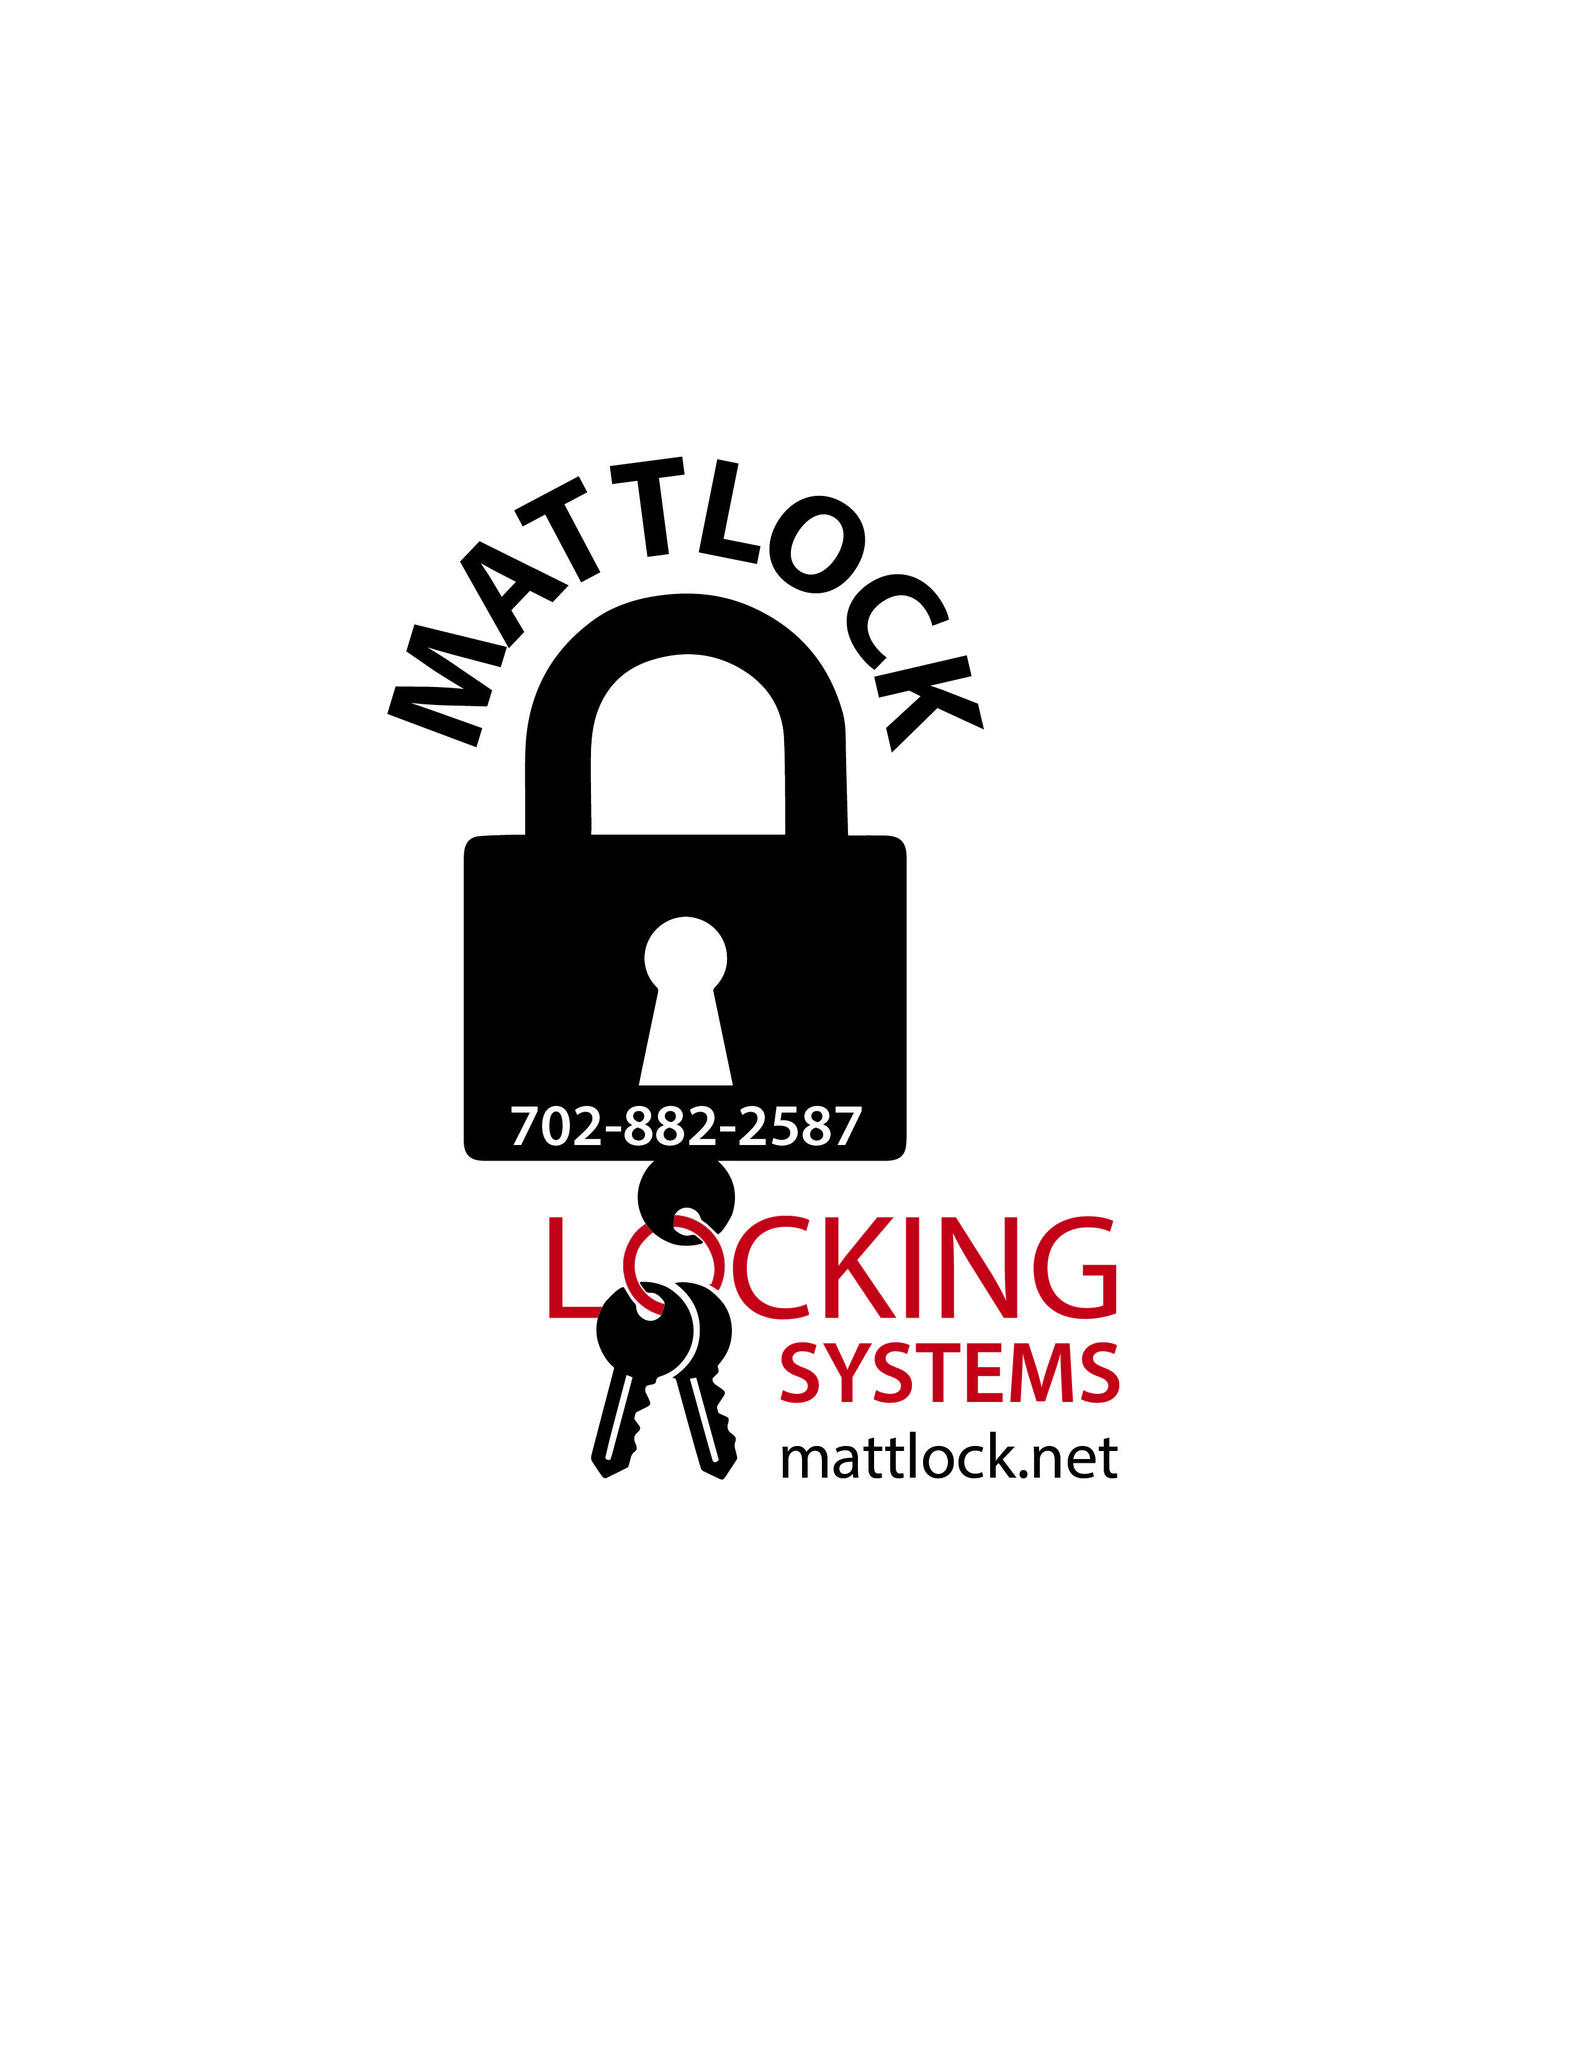 Mattlock Locking Systems - Nextdoor